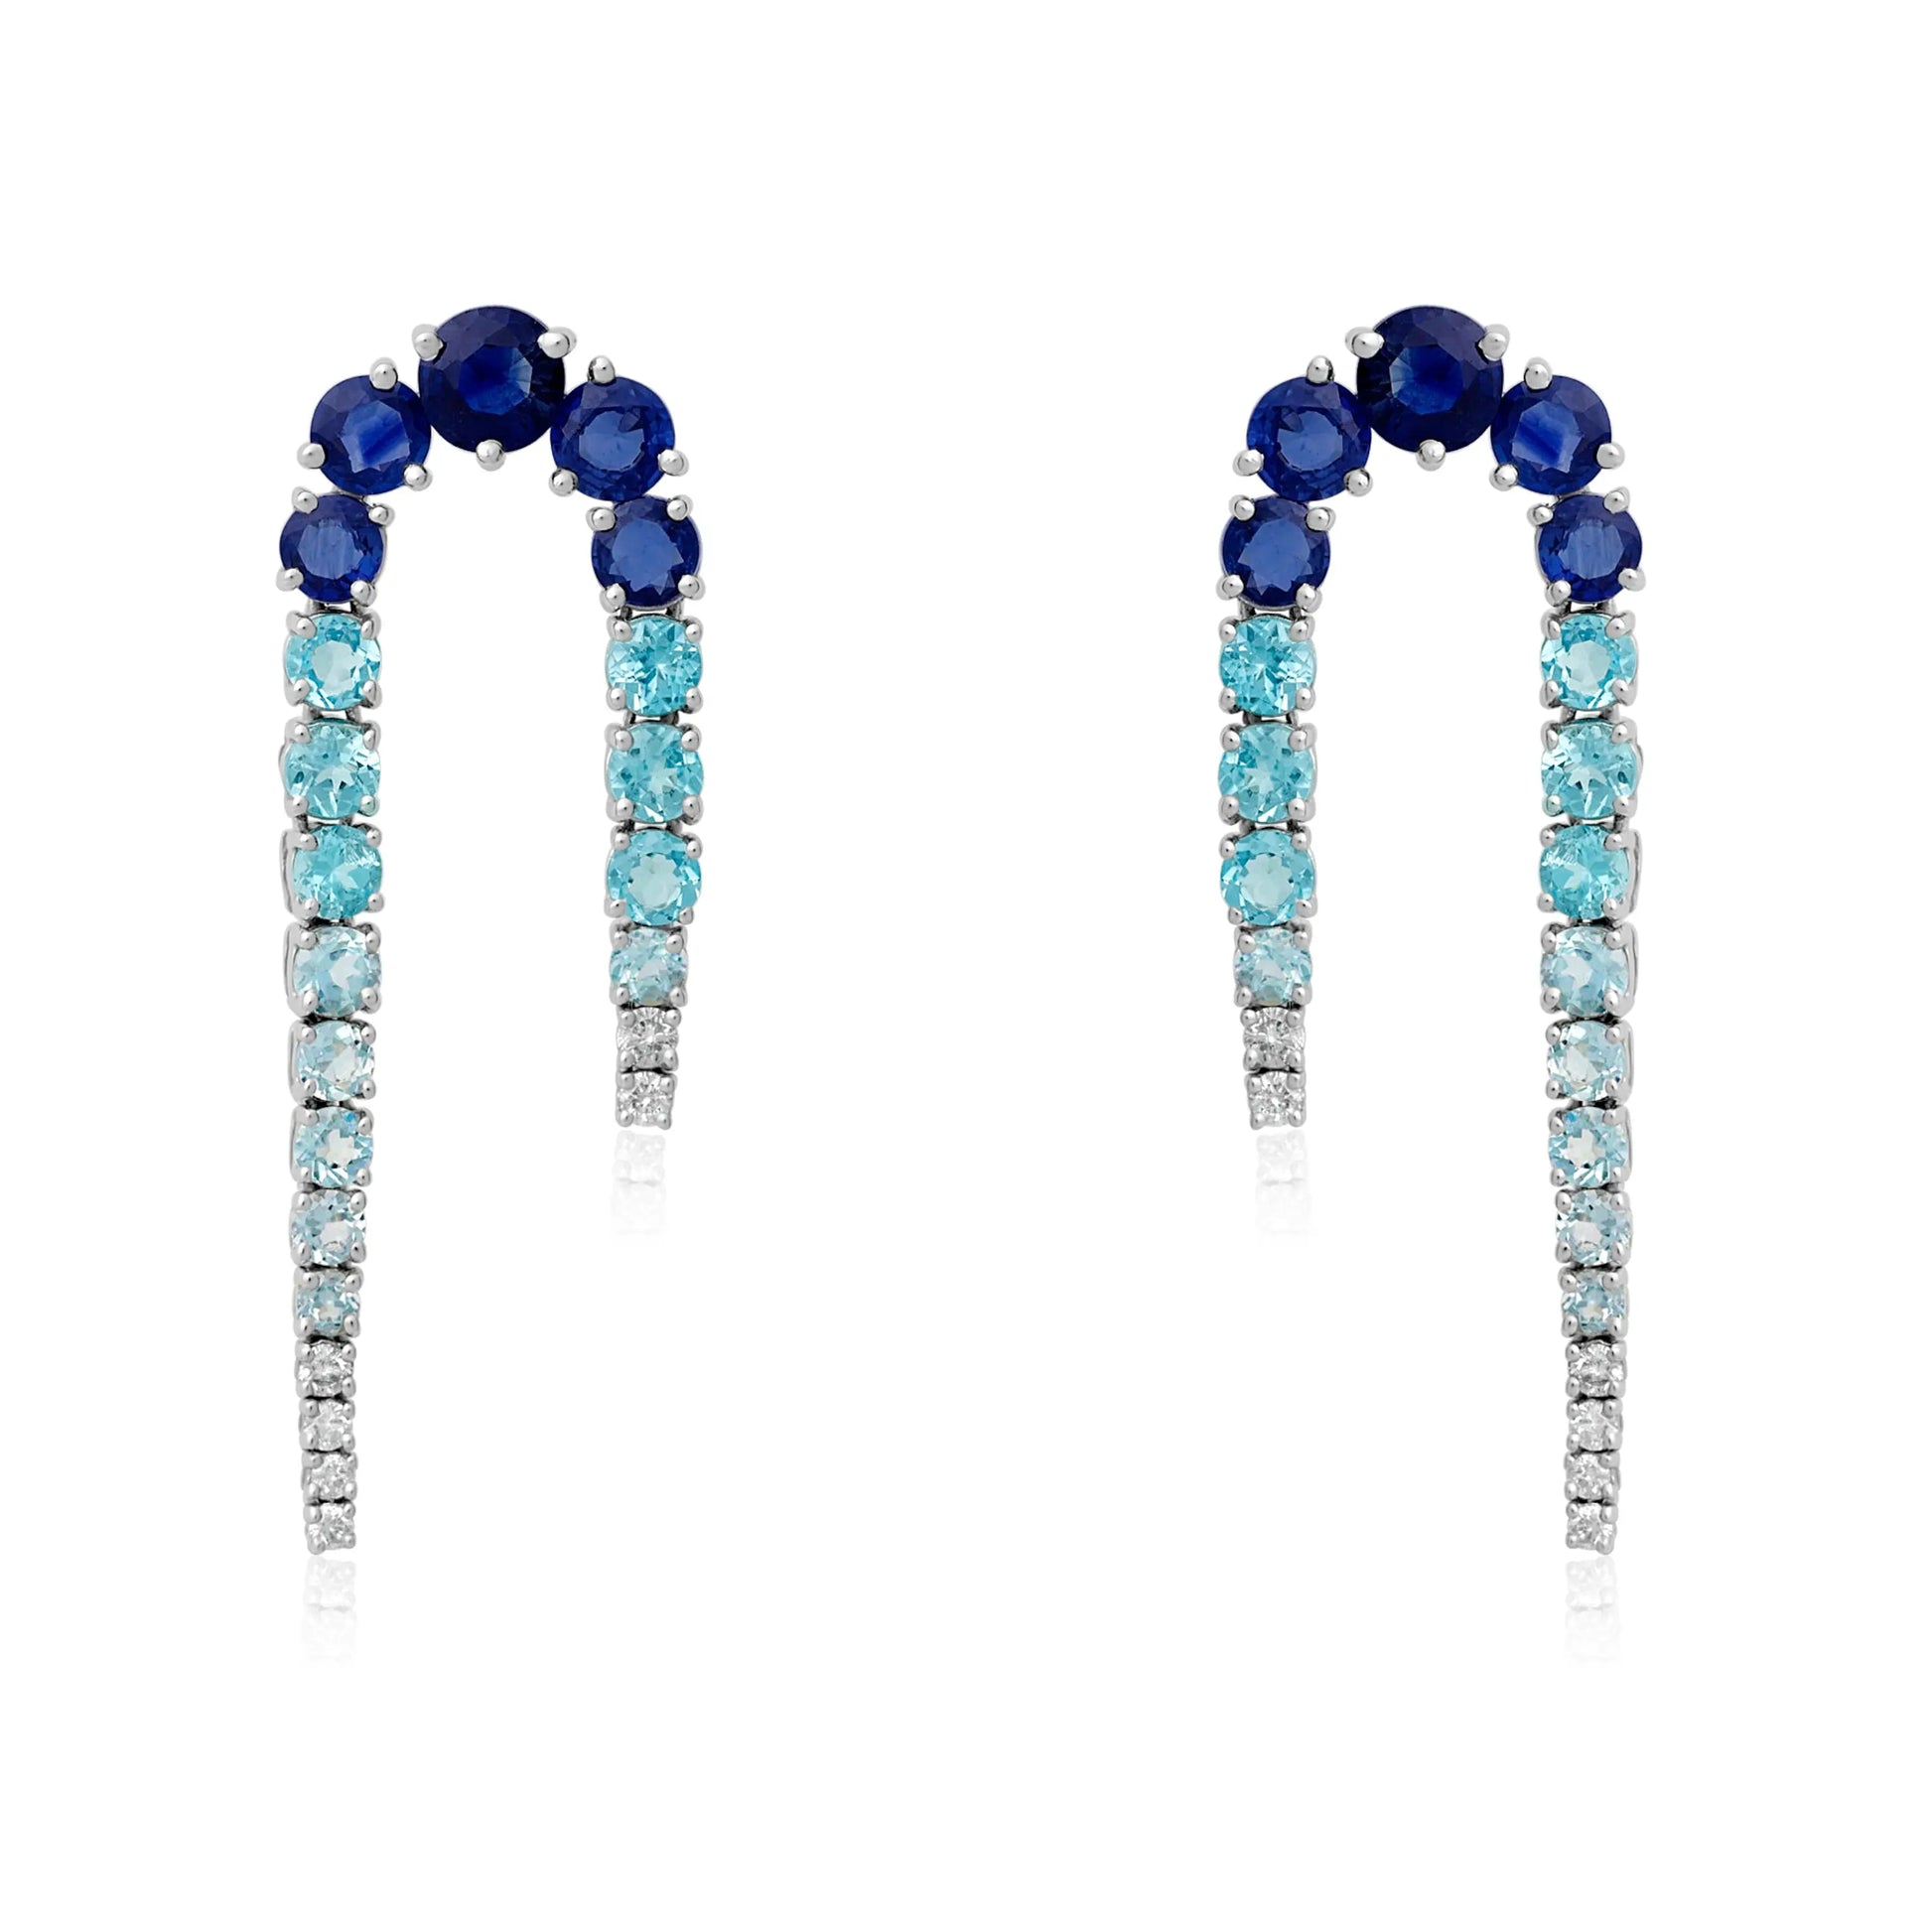 Turn Dancing Blue Gradient Earrings Princess Jewelry Shop